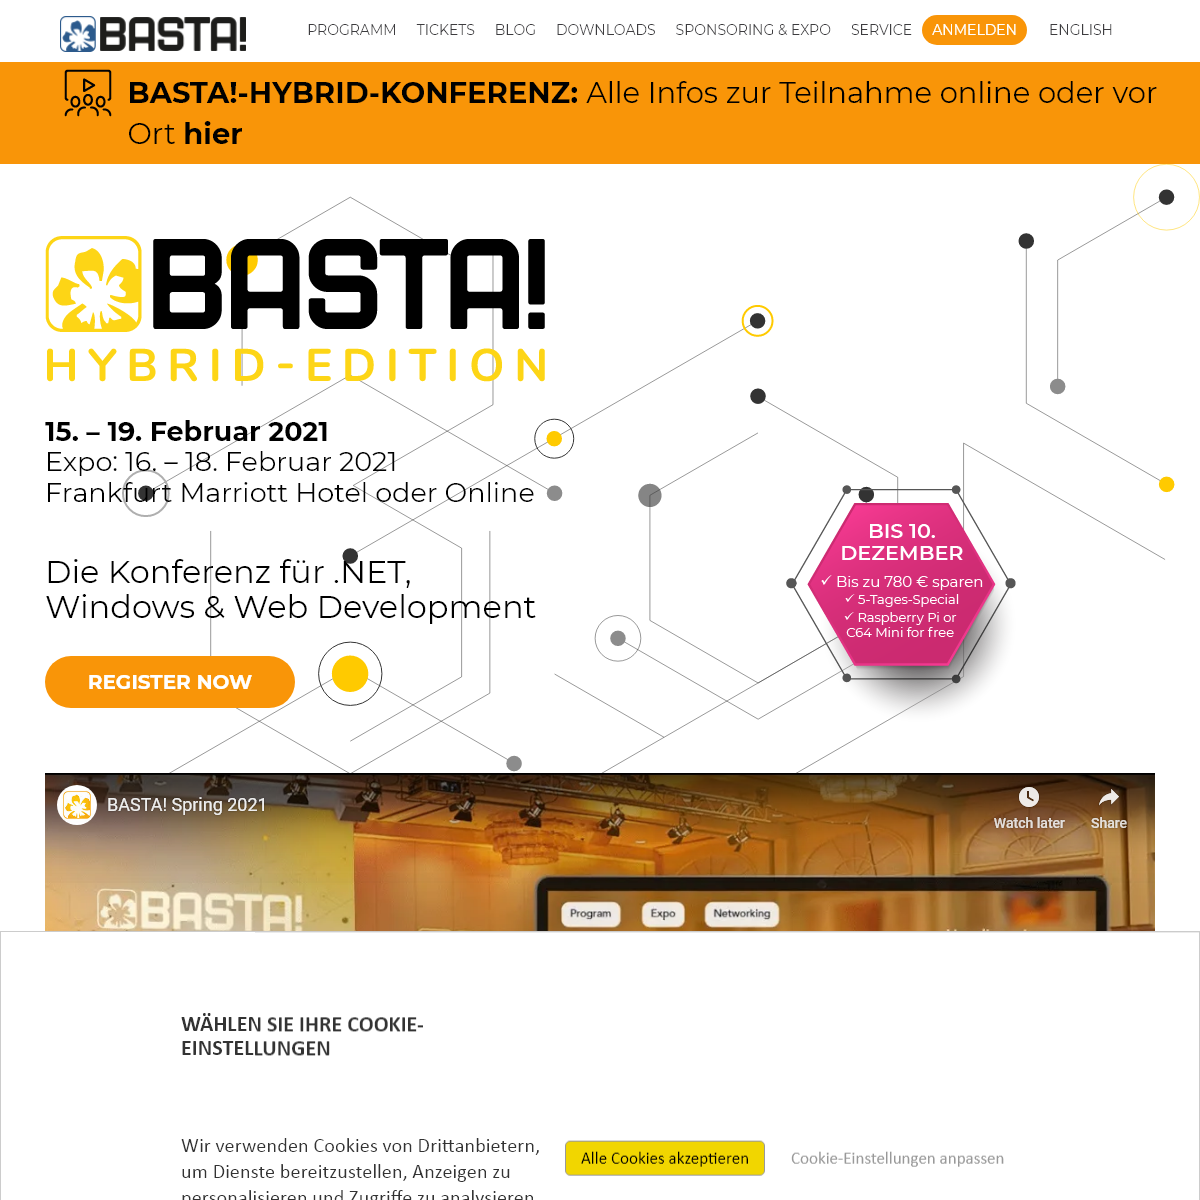 A complete backup of basta.net